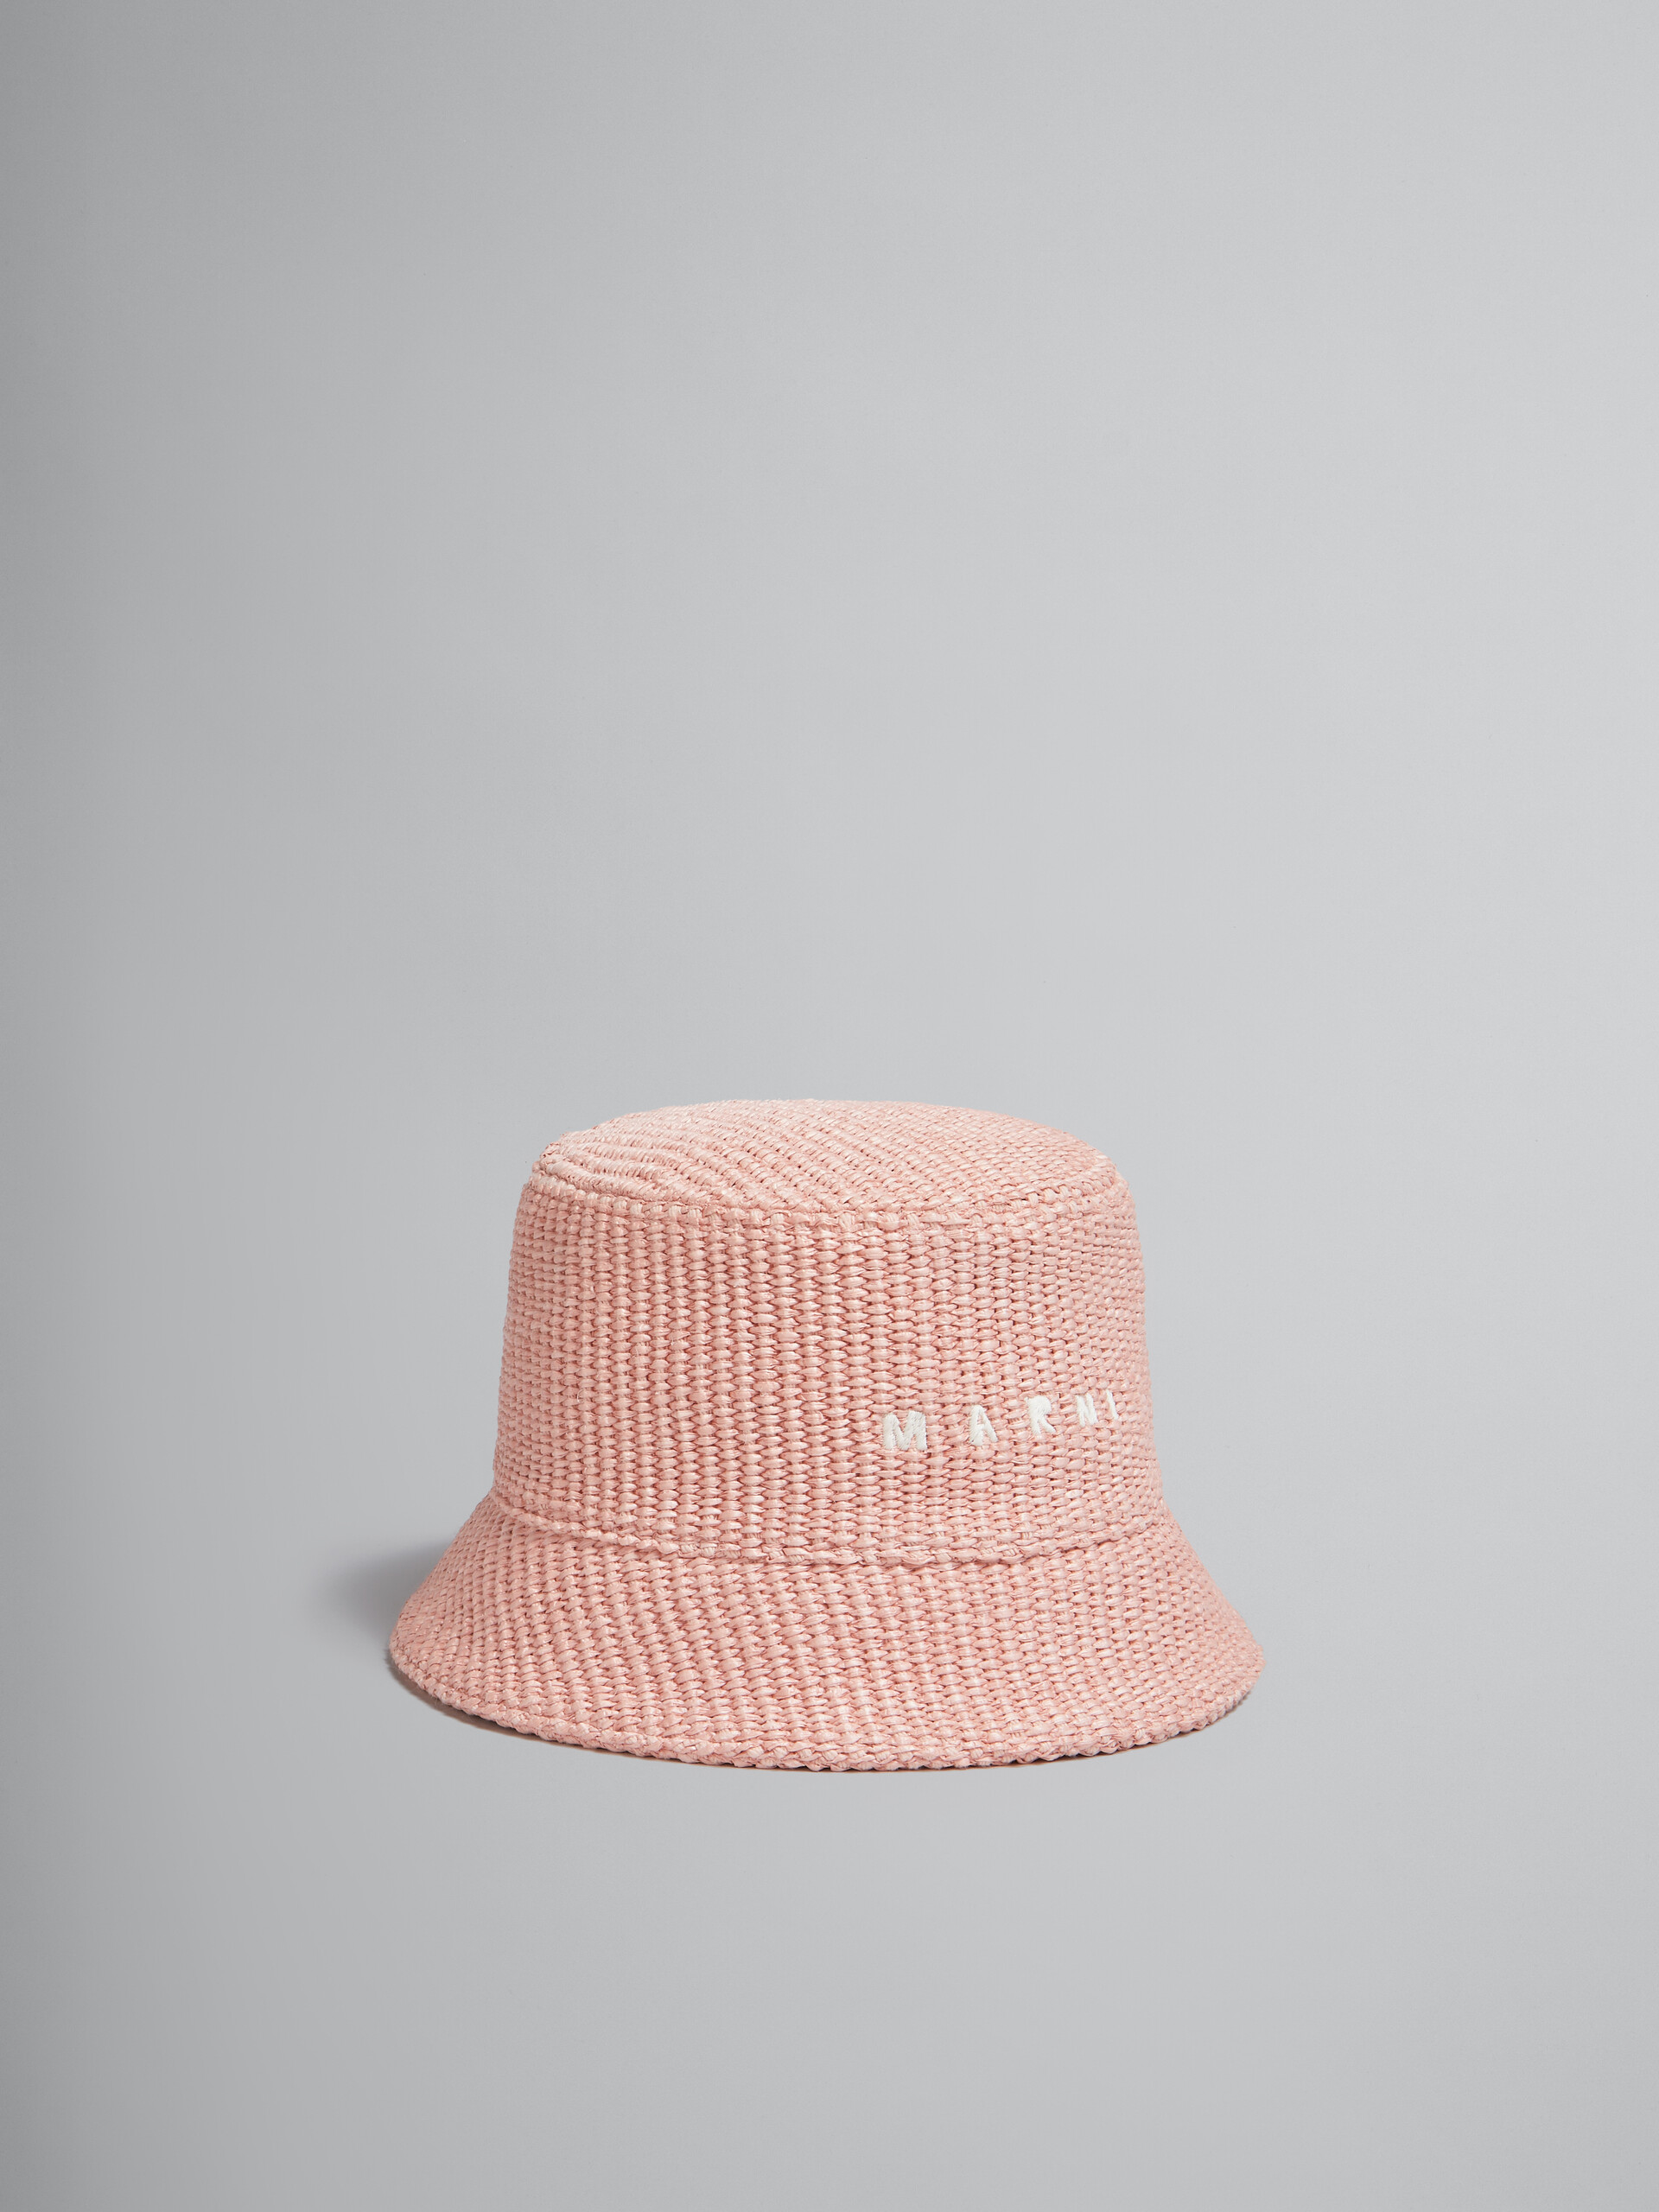 Gorro de pescador rosa de rafia con logotipo bordado - Sombrero - Image 1